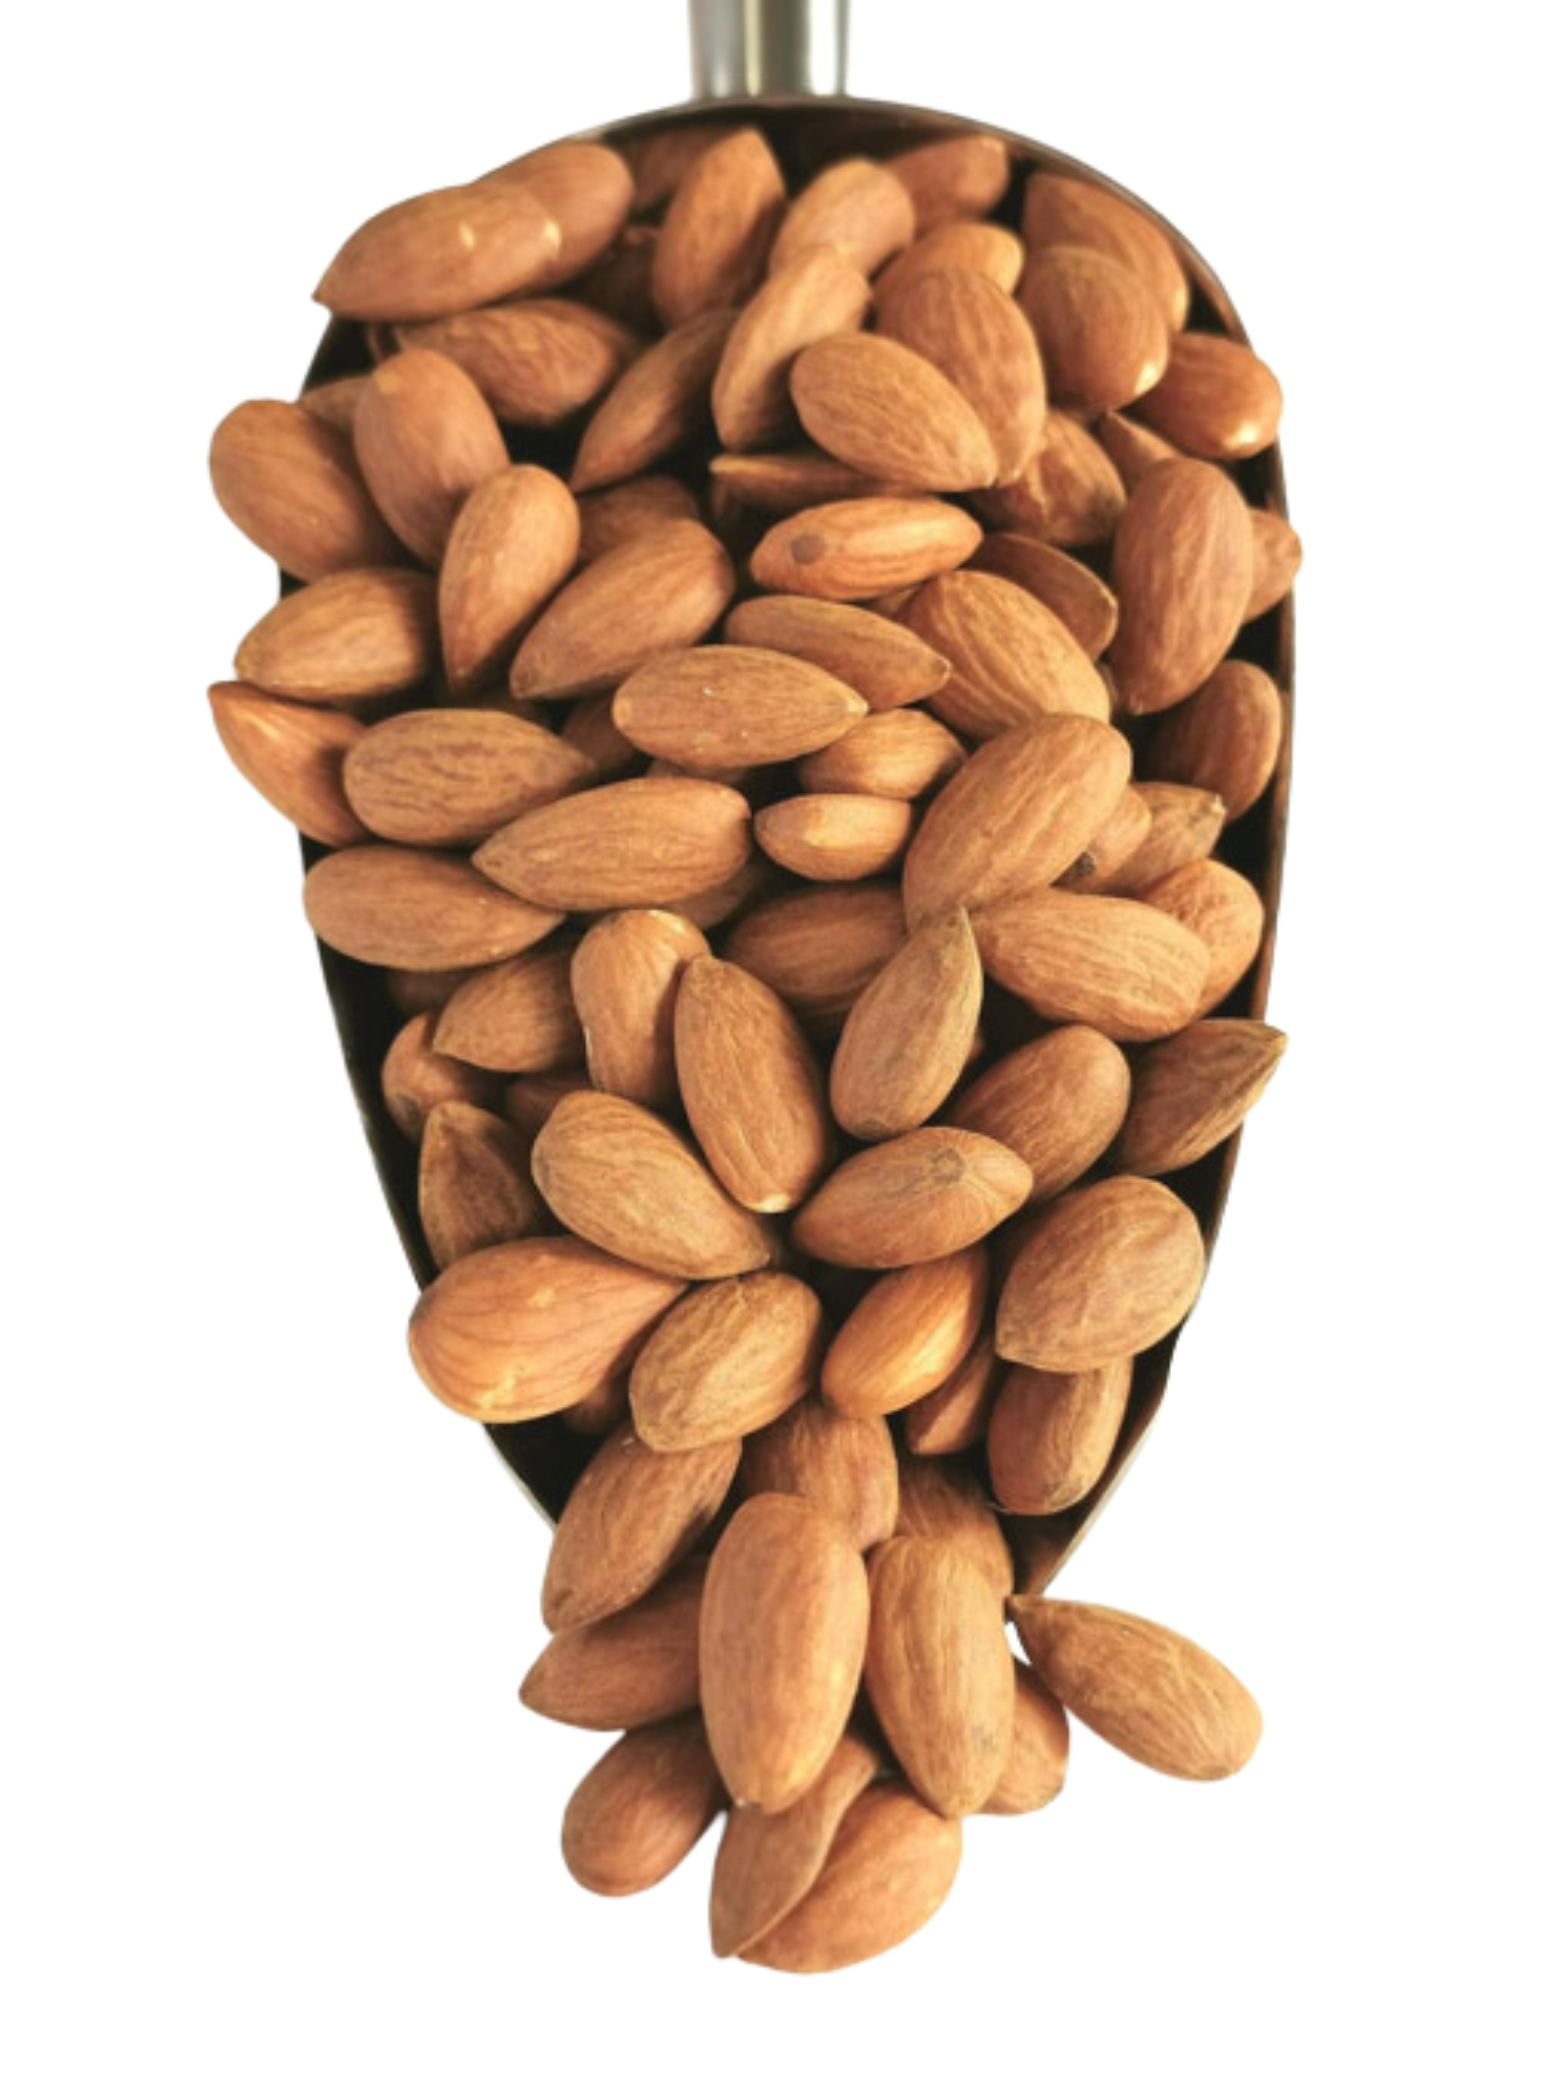 Almonds - whole & raw